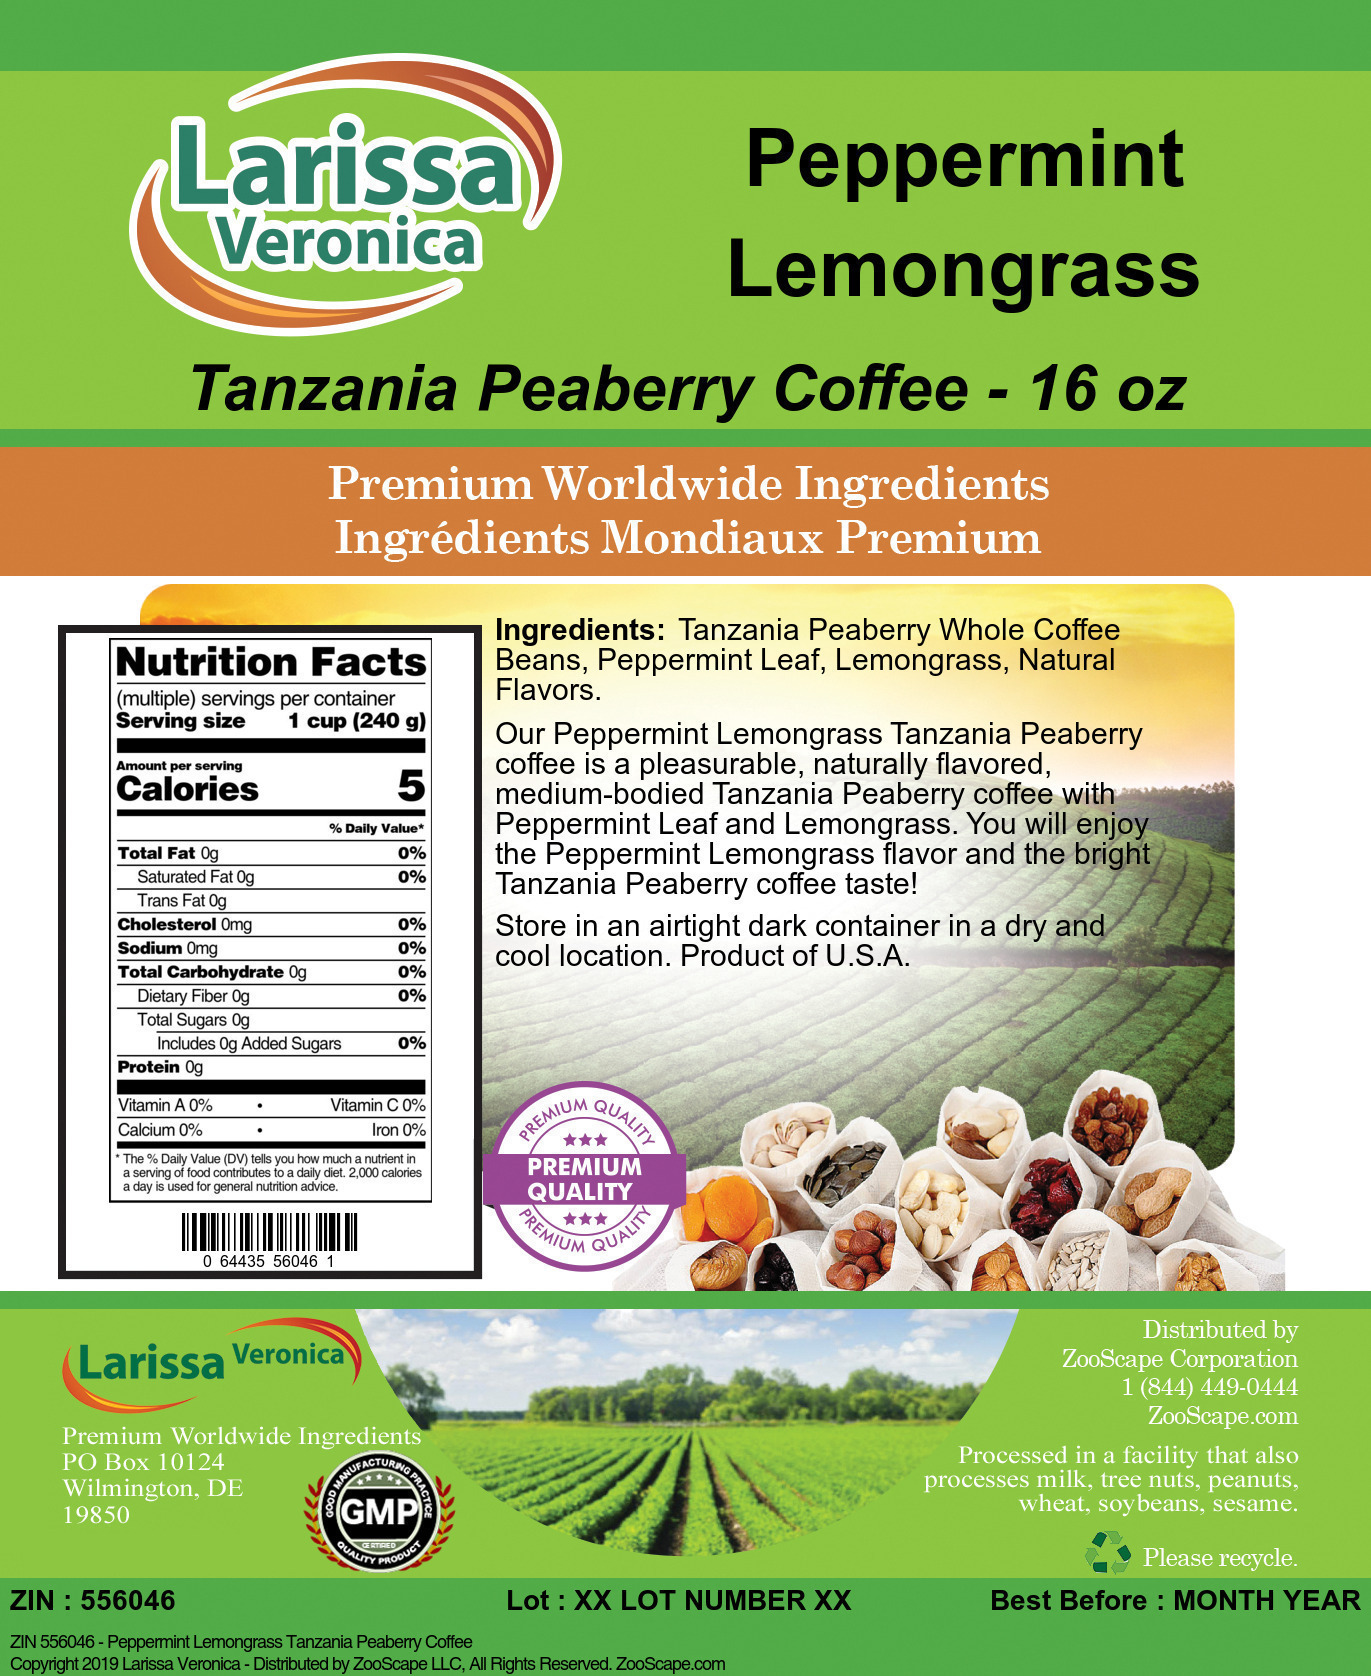 Peppermint Lemongrass Tanzania Peaberry Coffee - Label